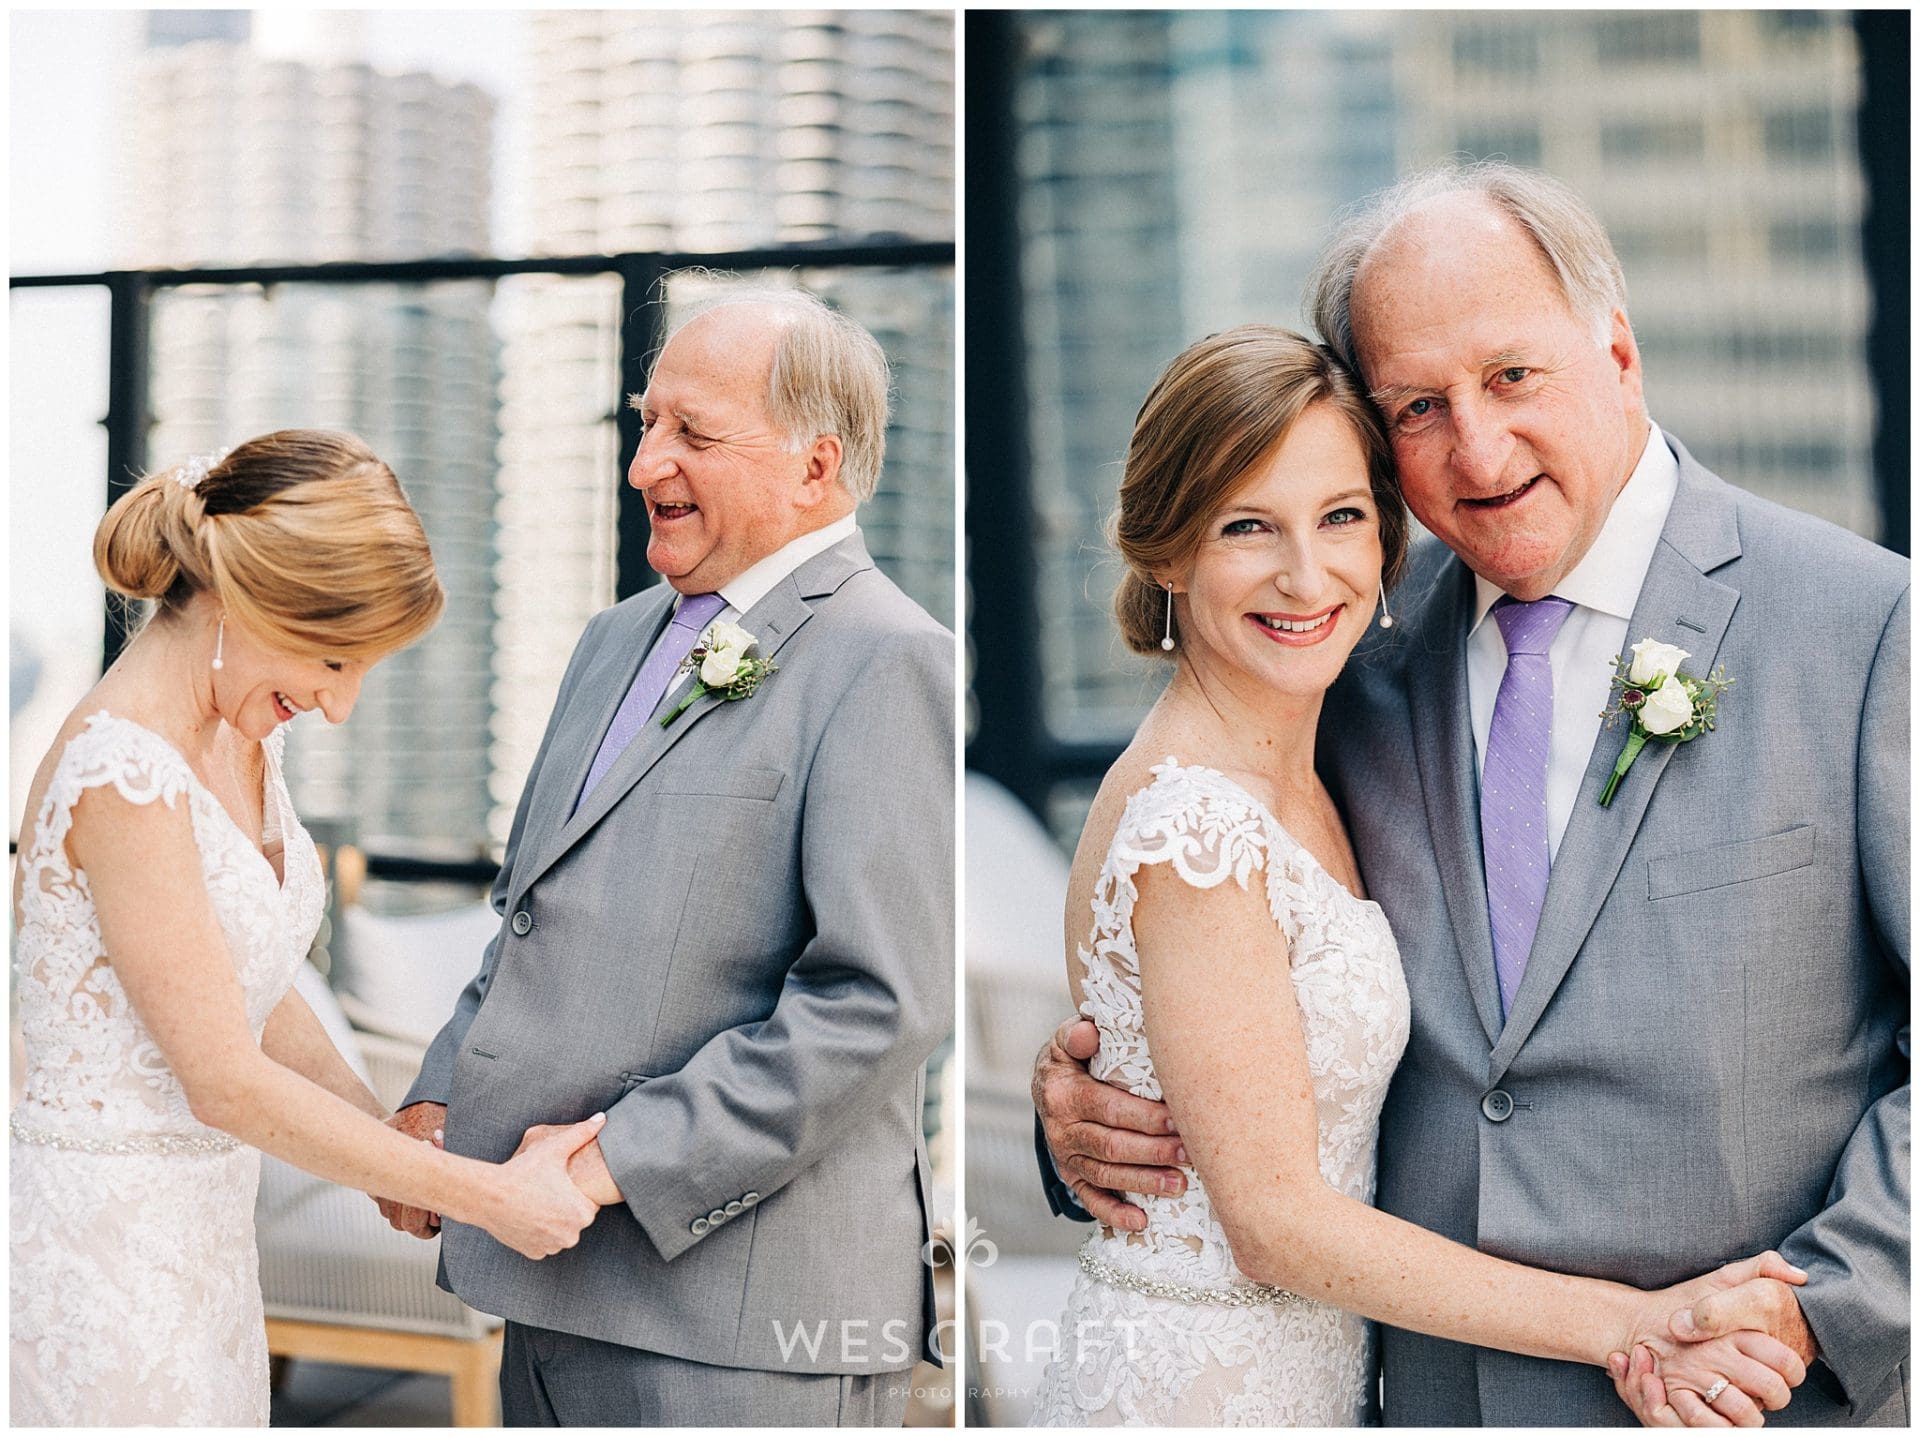 Chicago Rooftop Wedding Photos